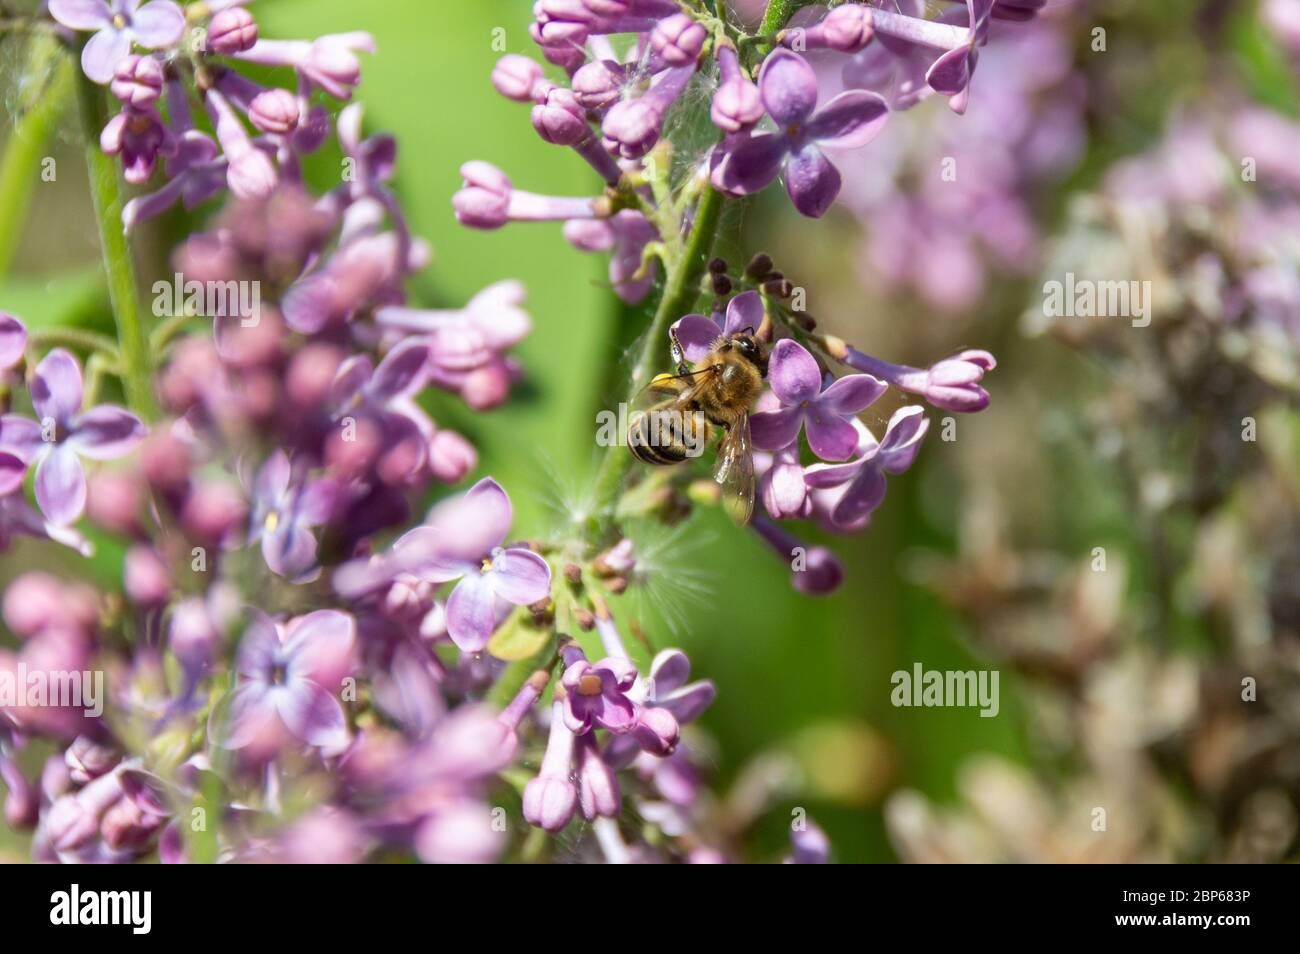 Flores de lila púrpura y la abeja que recoge néctar y polinizan el arbusto de lila. cerca de la abeja sobre fondo de lila. Primer plano de la abeja europea. Foto de stock